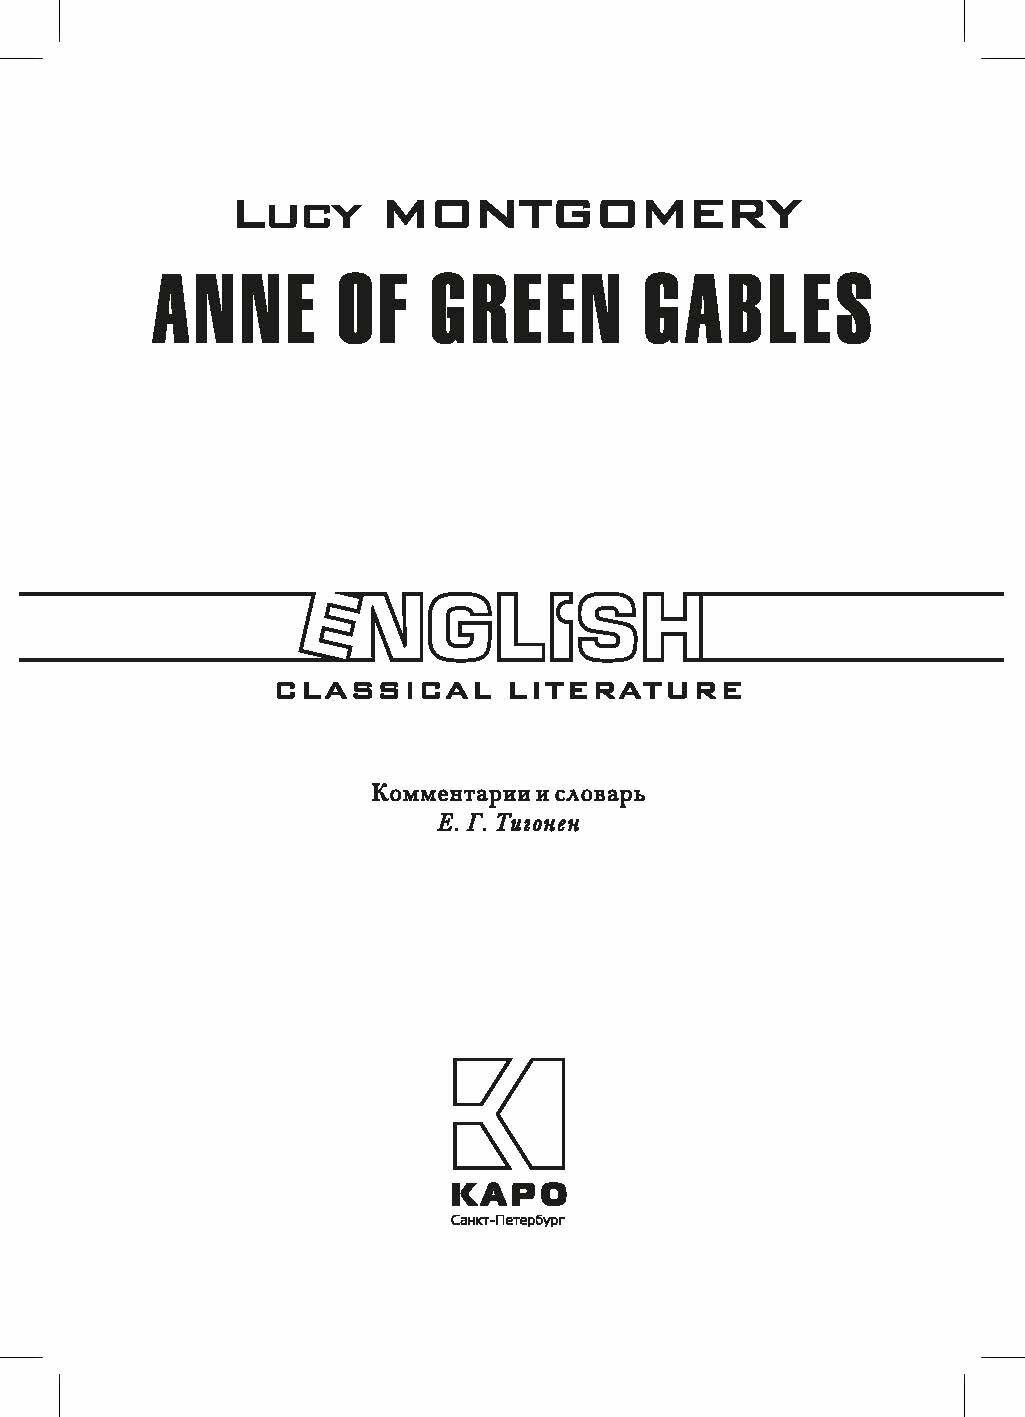 Anne of Green Gables (Монтгомери Л.) - фото №3